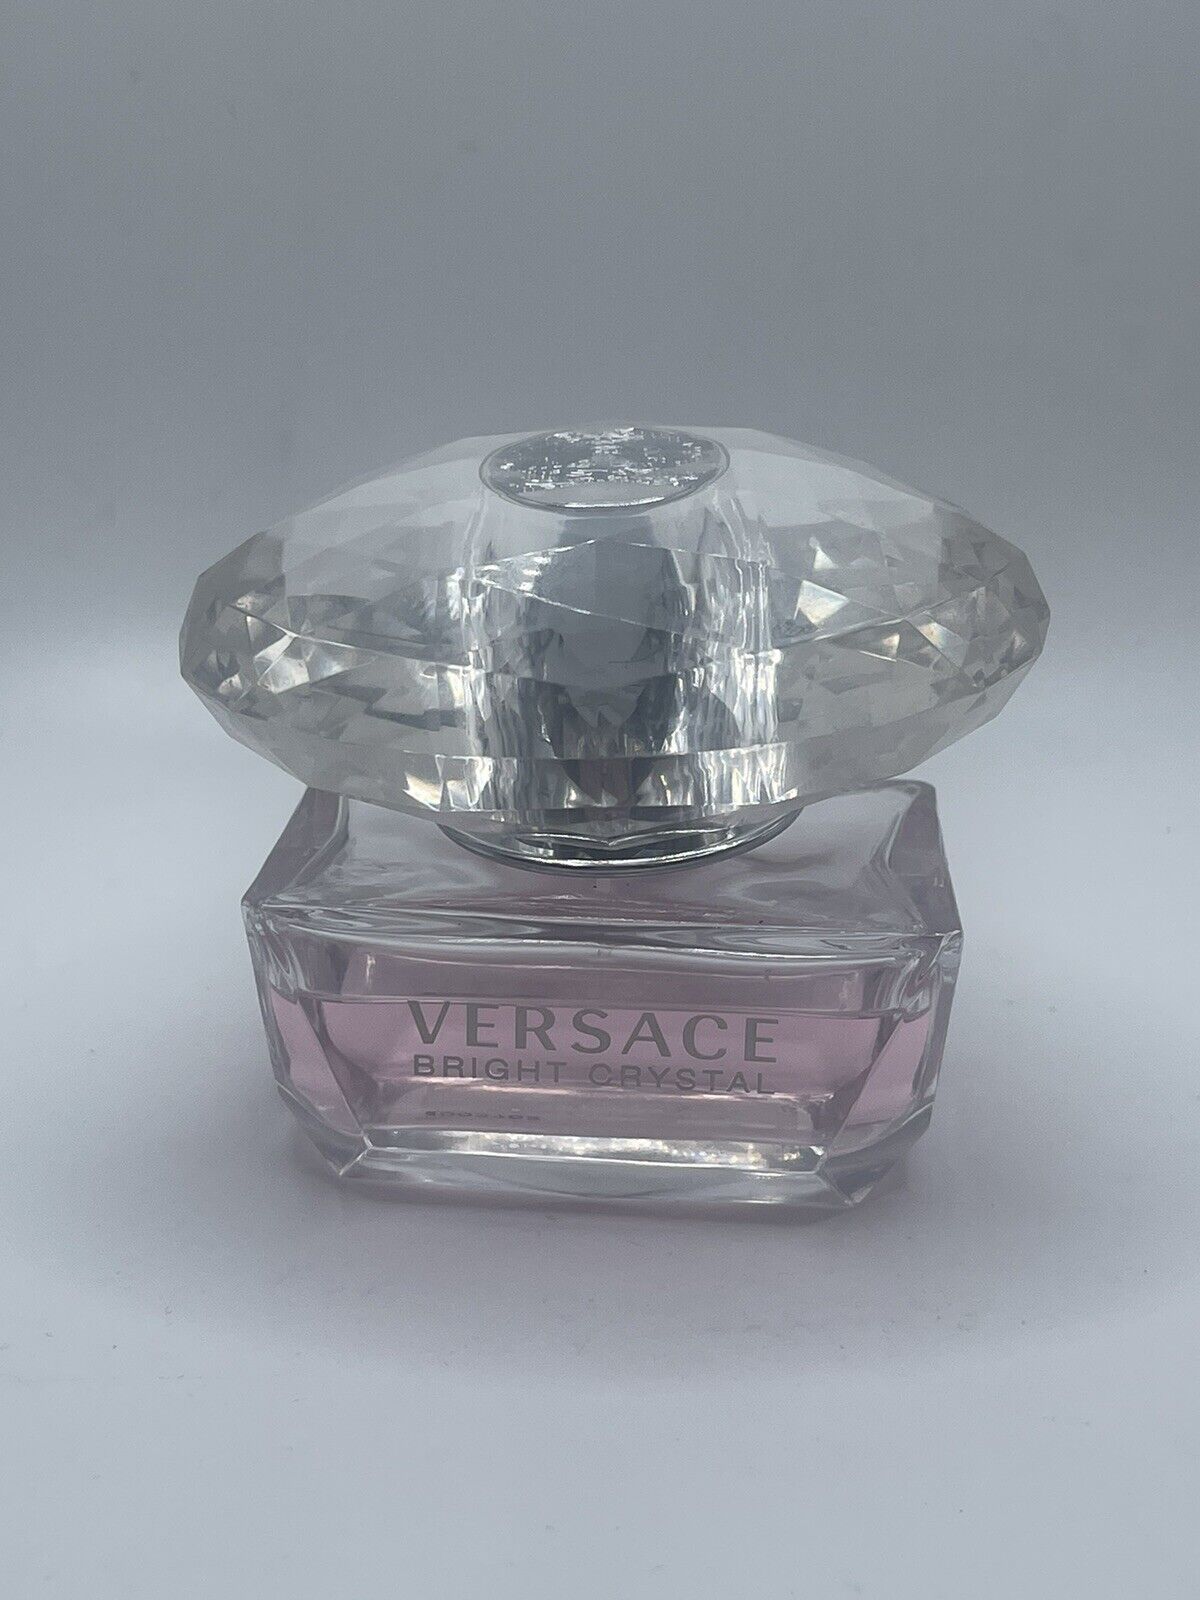 Versace Bright Crystal Eau De Toilette Perfume Spray 1.7 fl oz/ 50 mL 80%